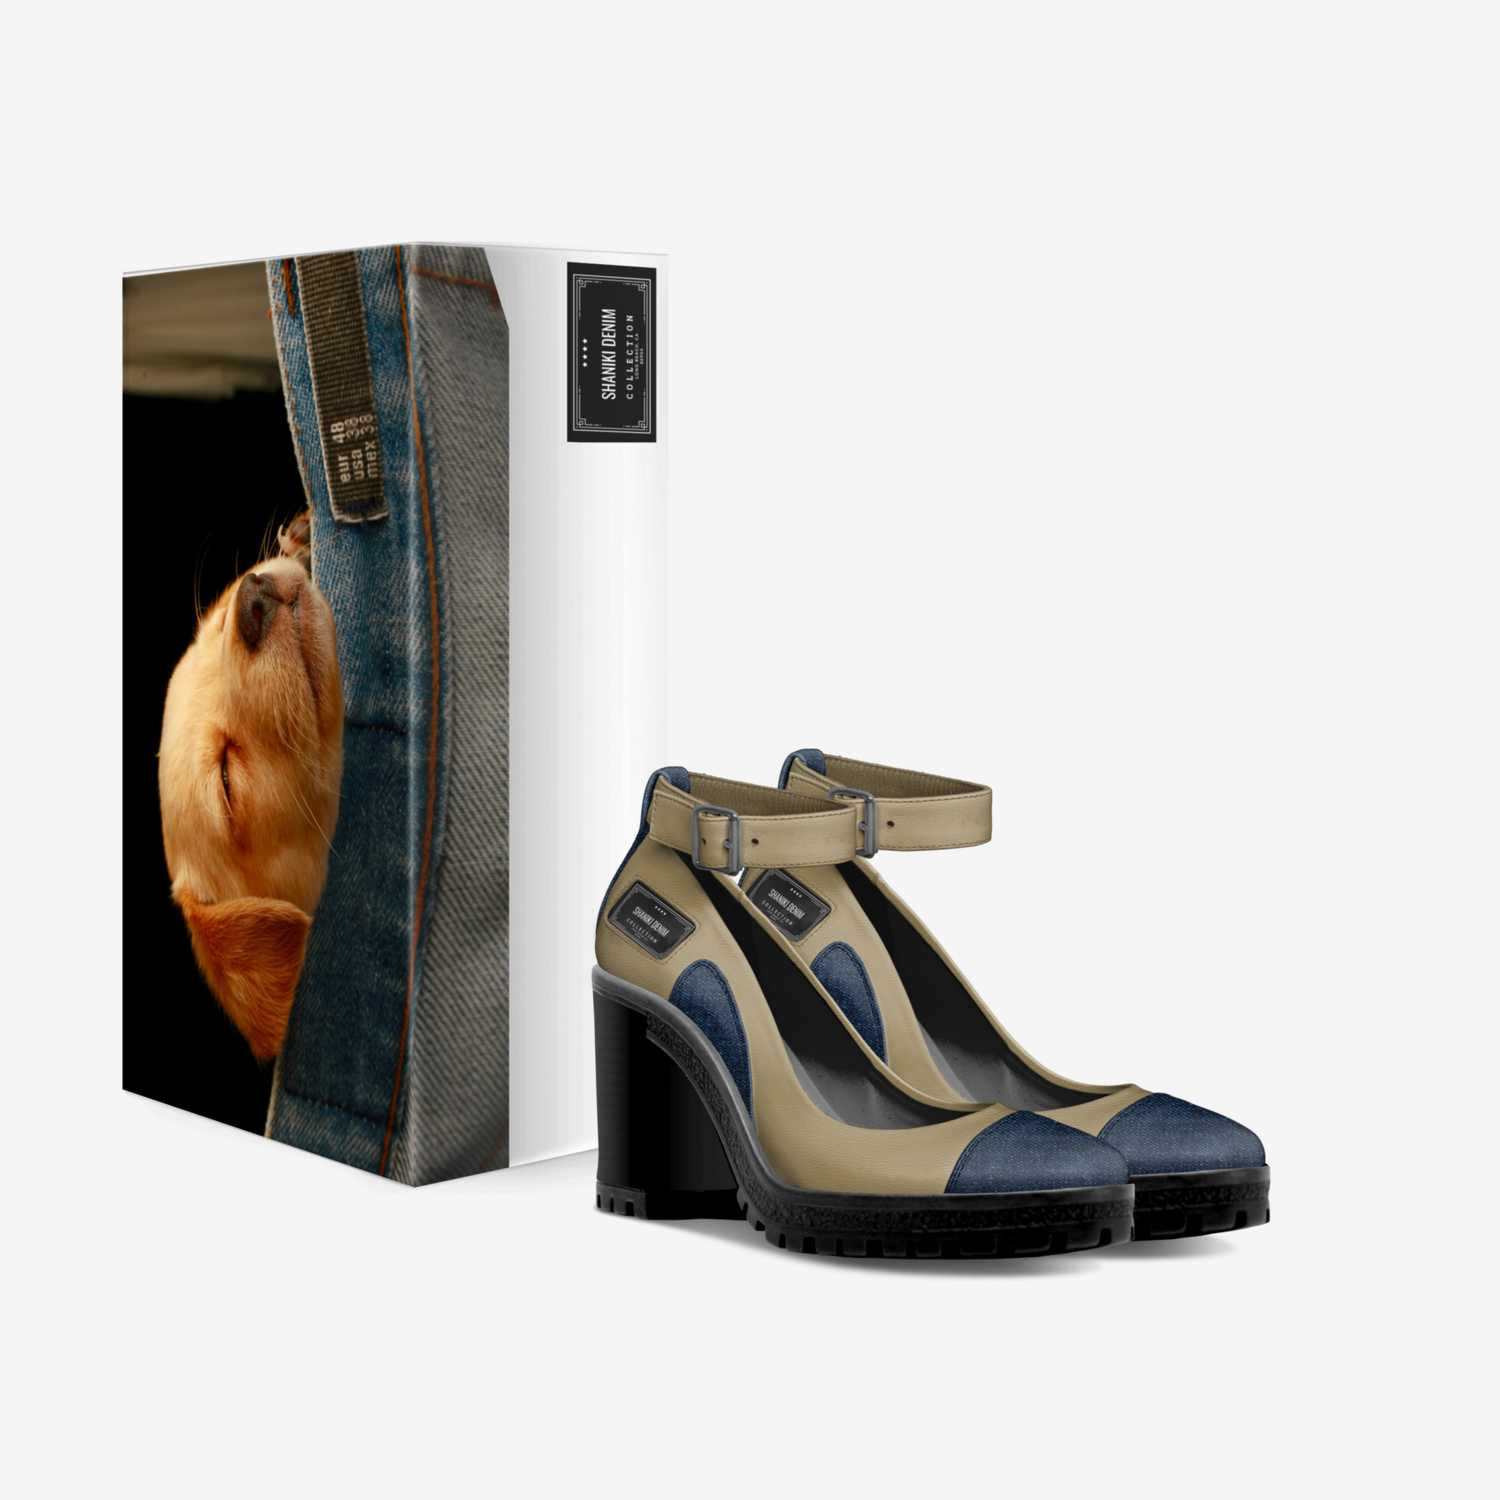 shaniki denim custom made in Italy shoes by Shaniki Smith | Box view